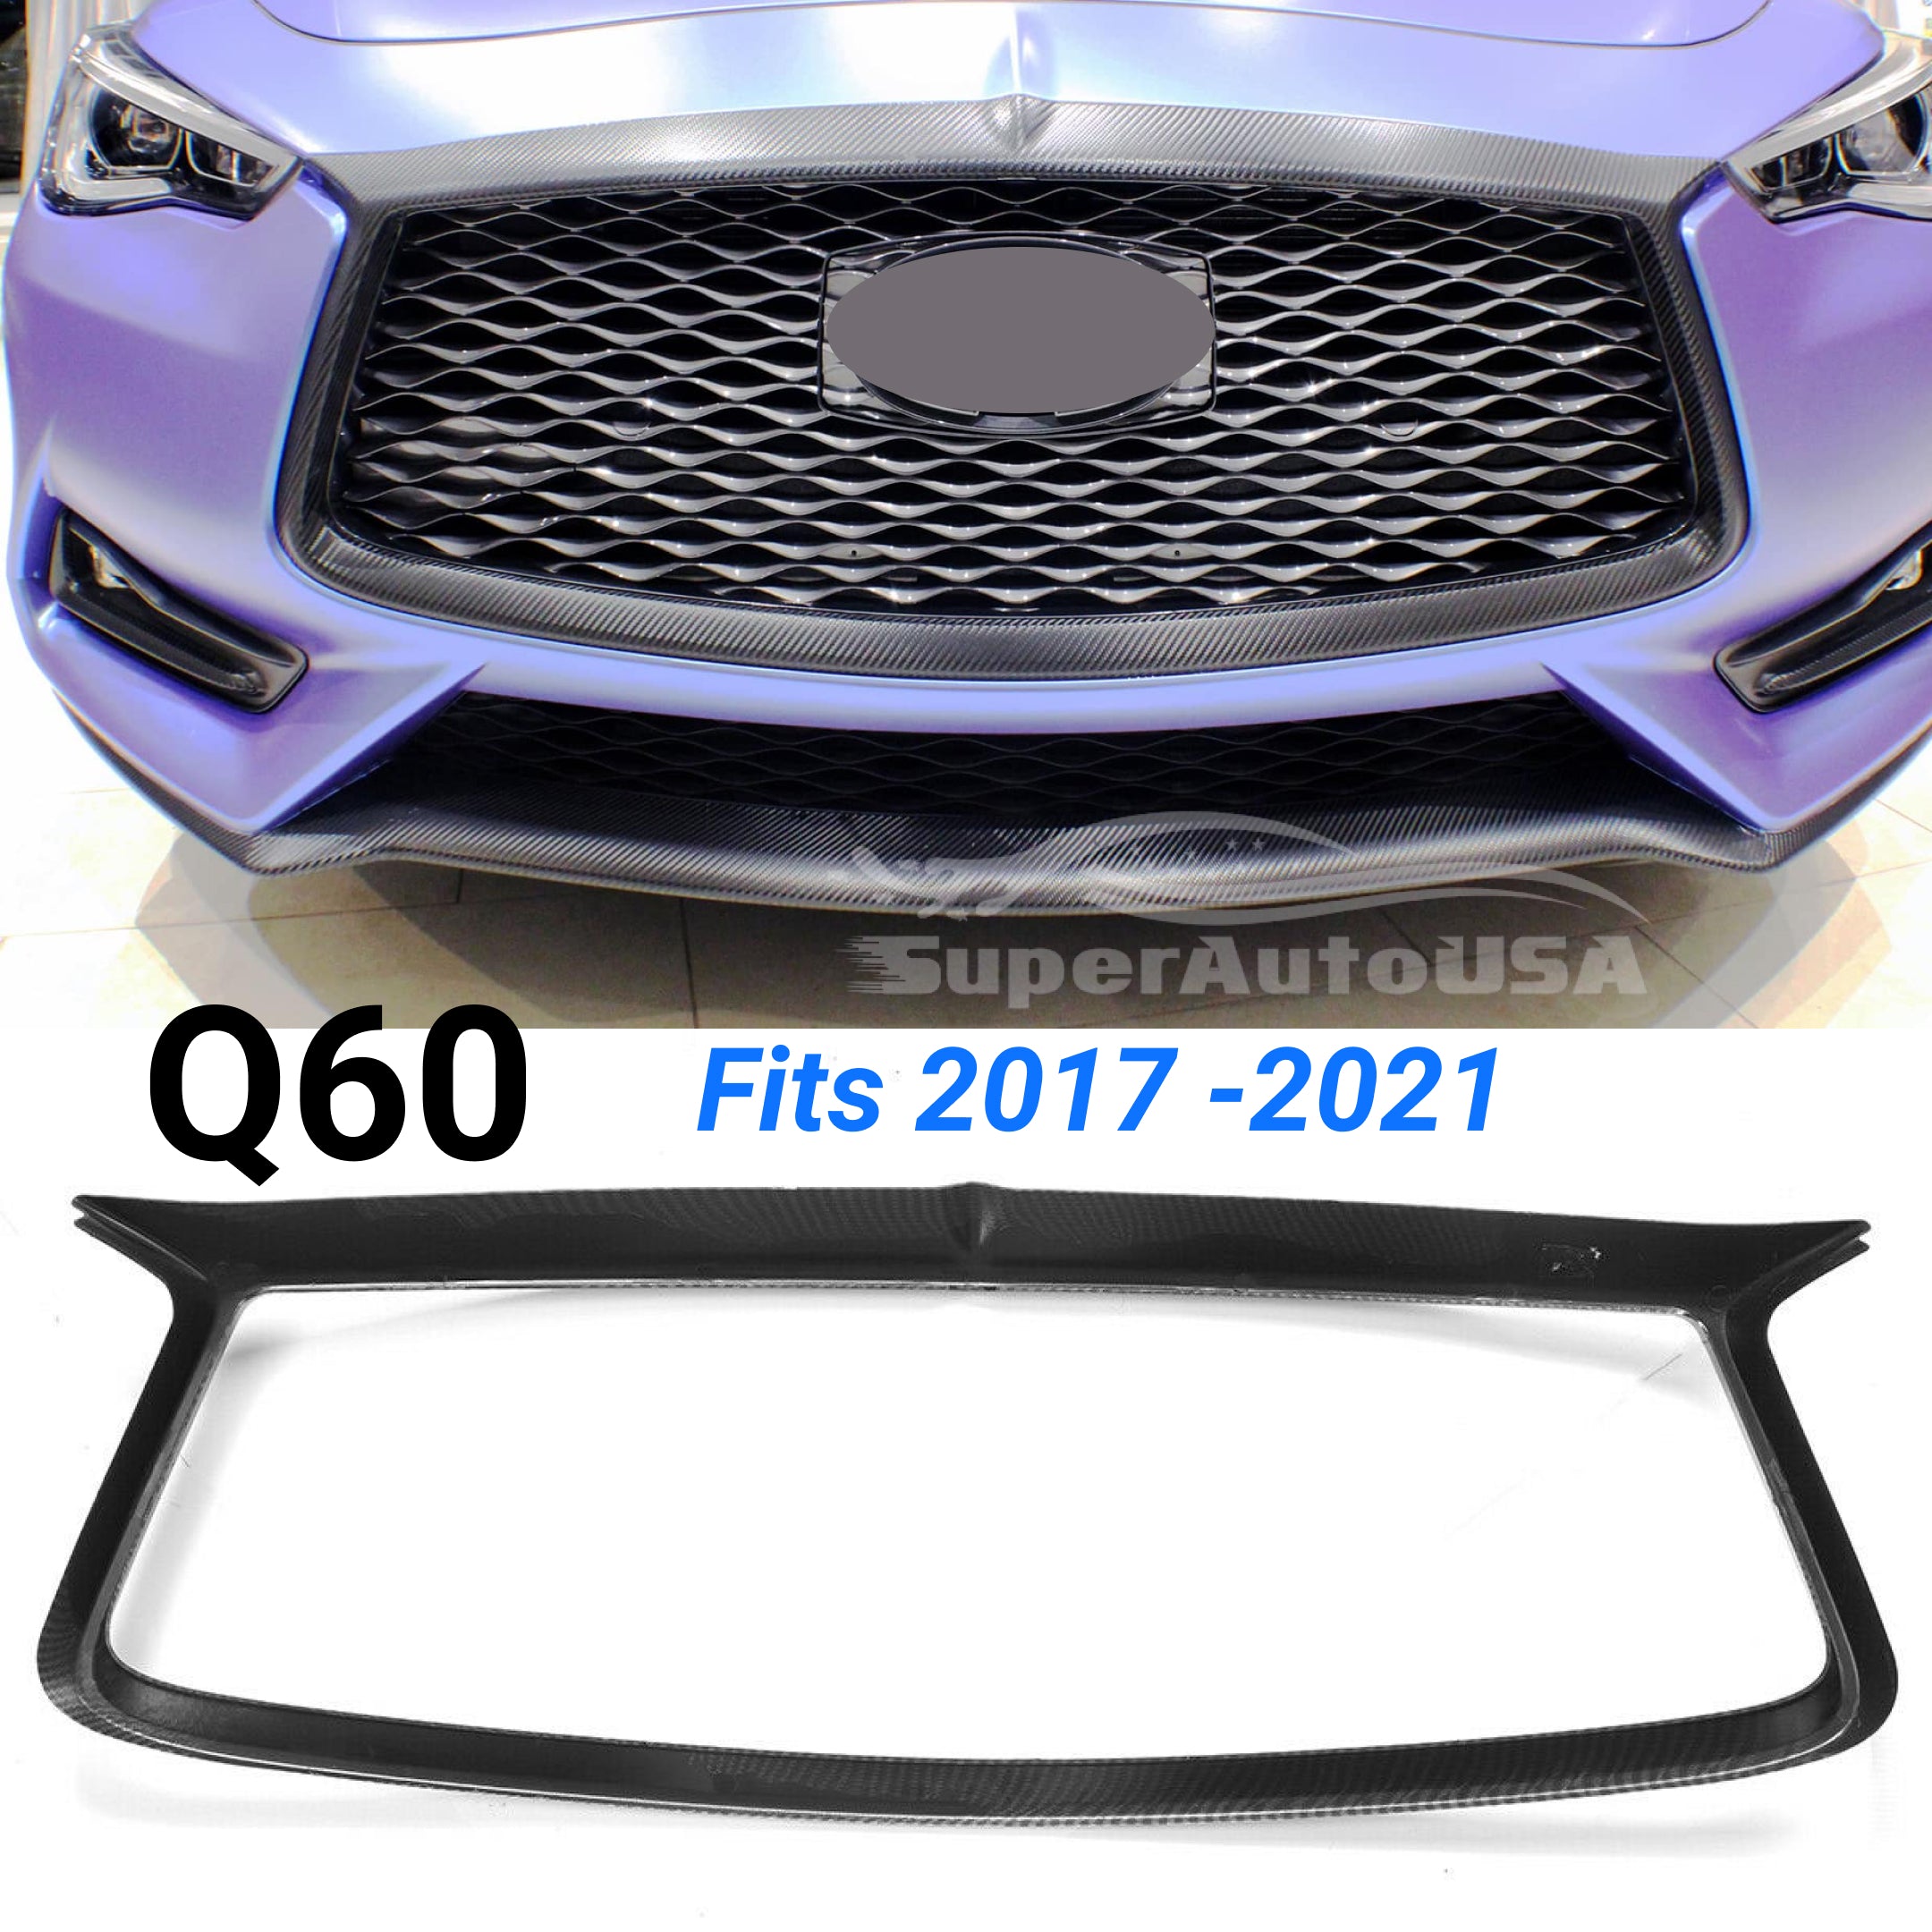 Fits 2017-2022 Q60 Front Grille Grill Outline Cover (Carbon Fiber Print)